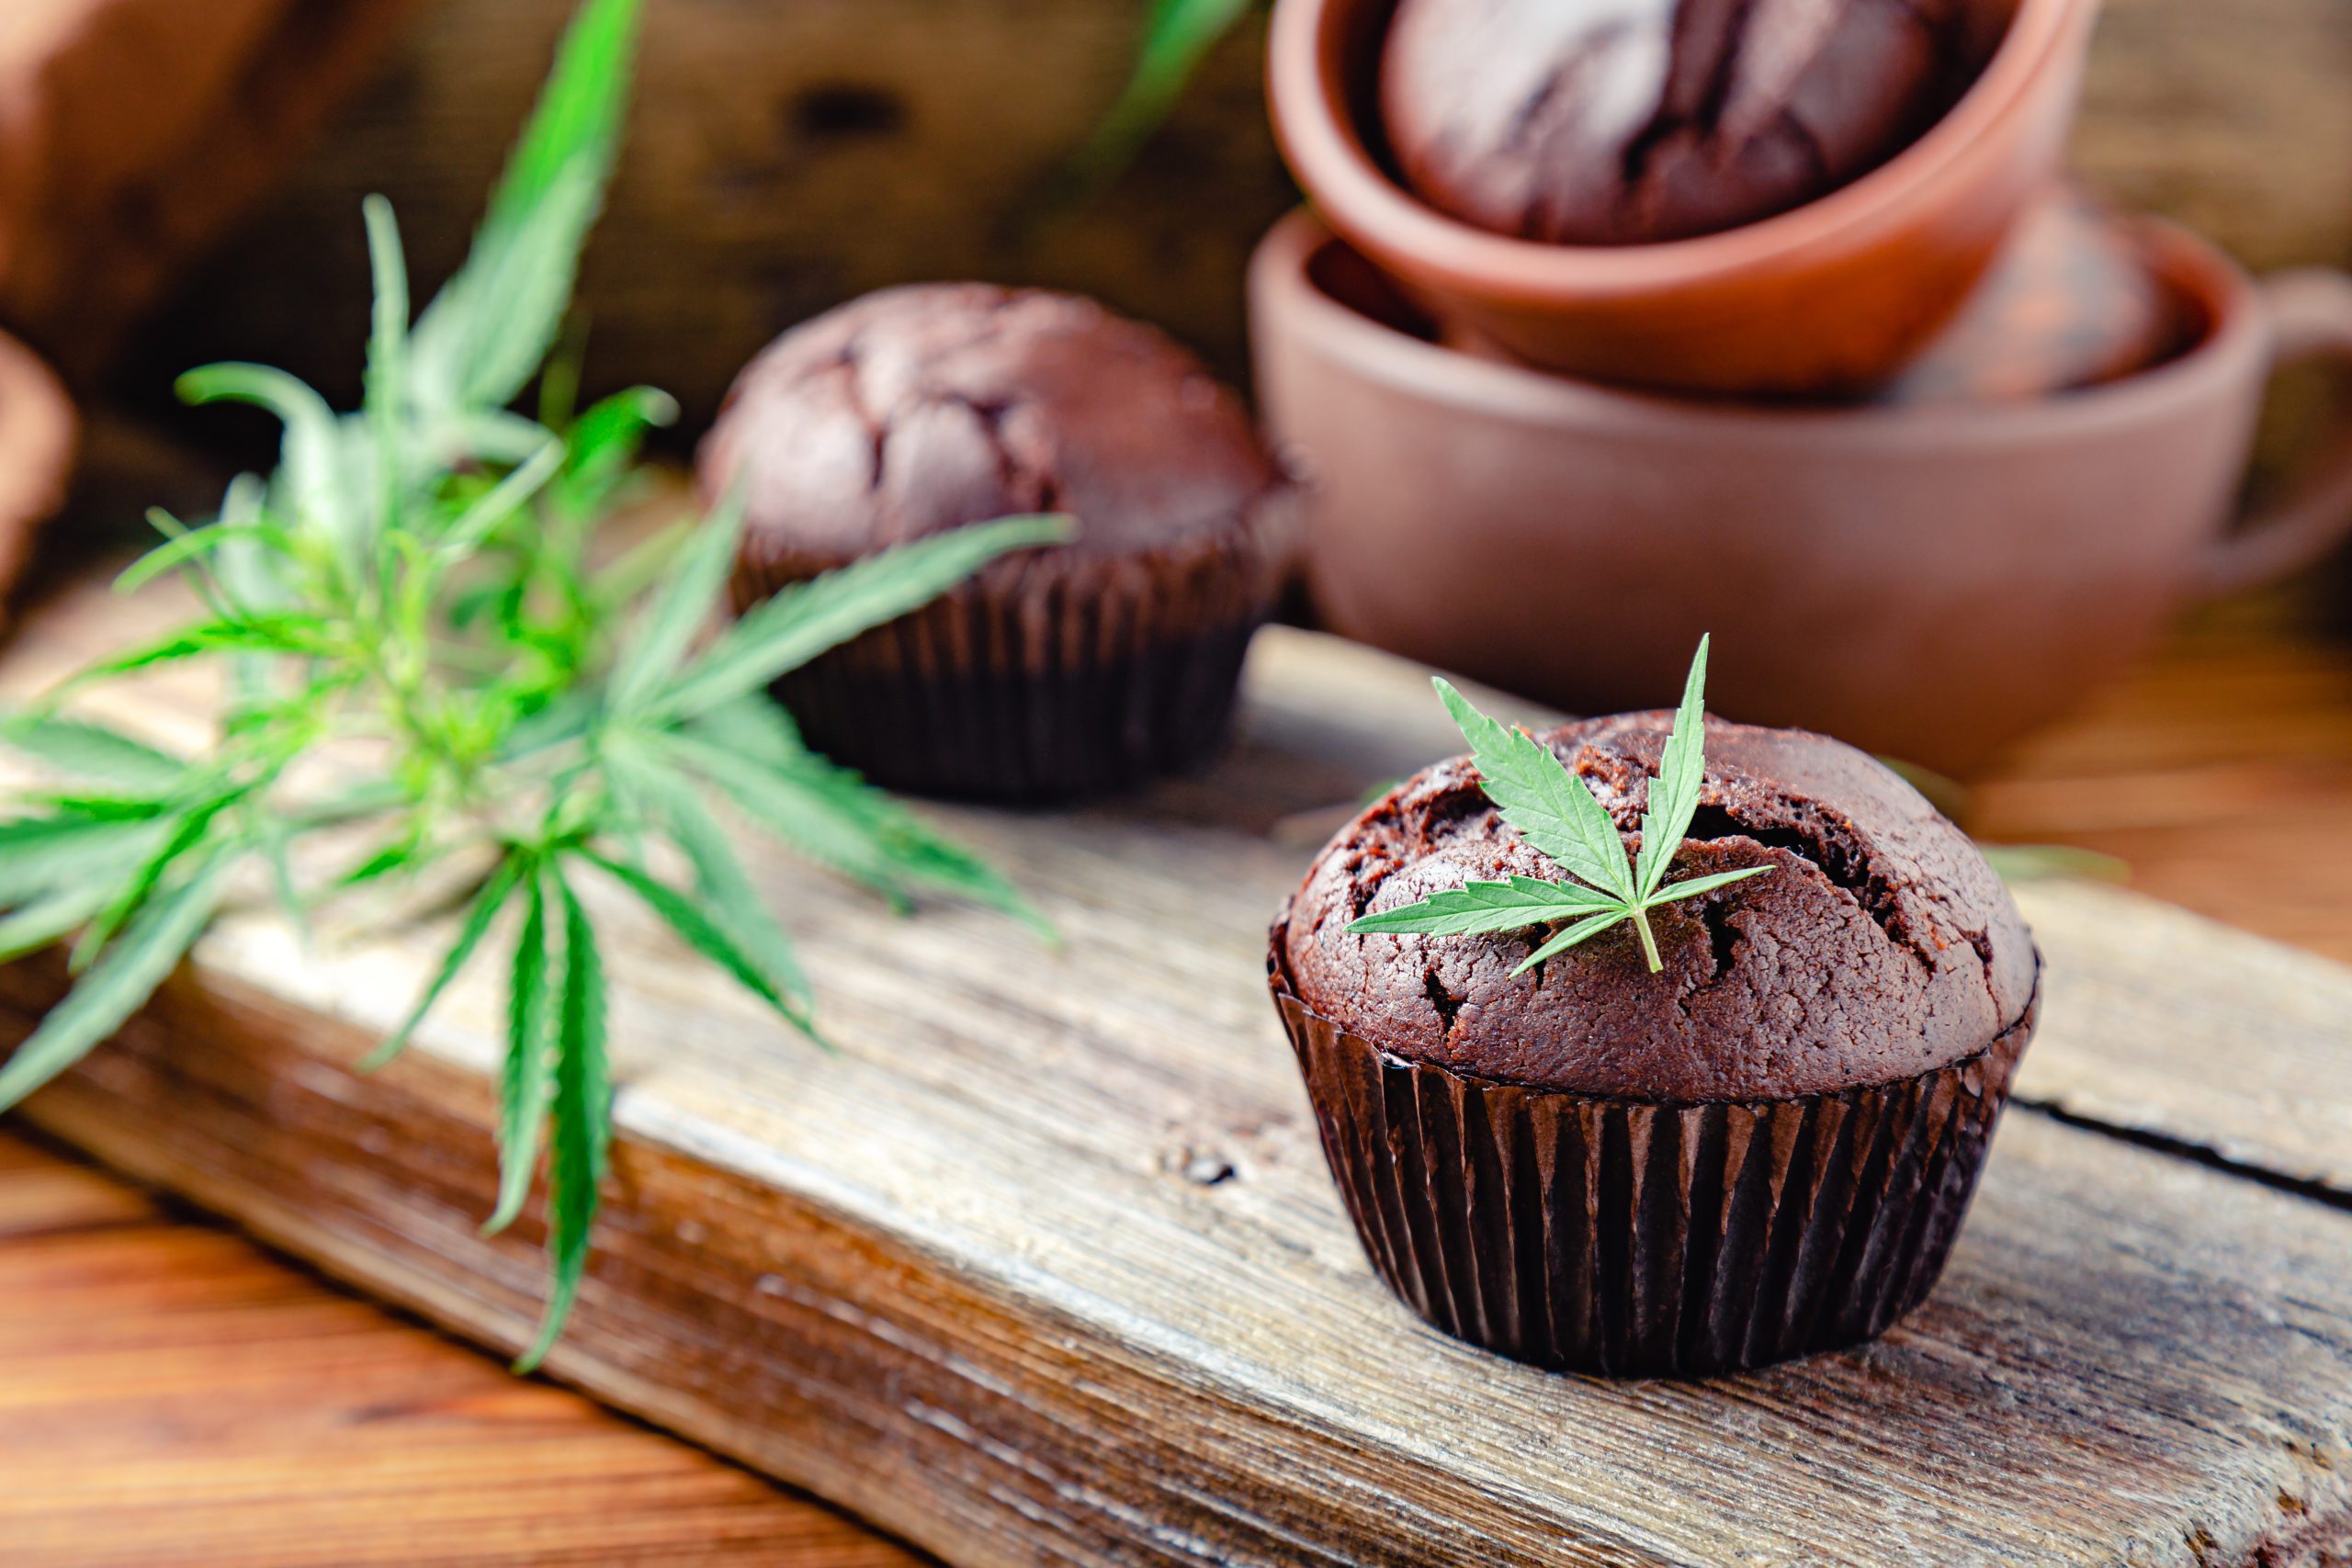 Chocolate cupcake muffins with cannabis leaves, weed cbd. Medical marijuana hemp drugs in food dessert. Cooking baking chocolate weed muffins. Cupcake with marijuana on dark brown wooden table.